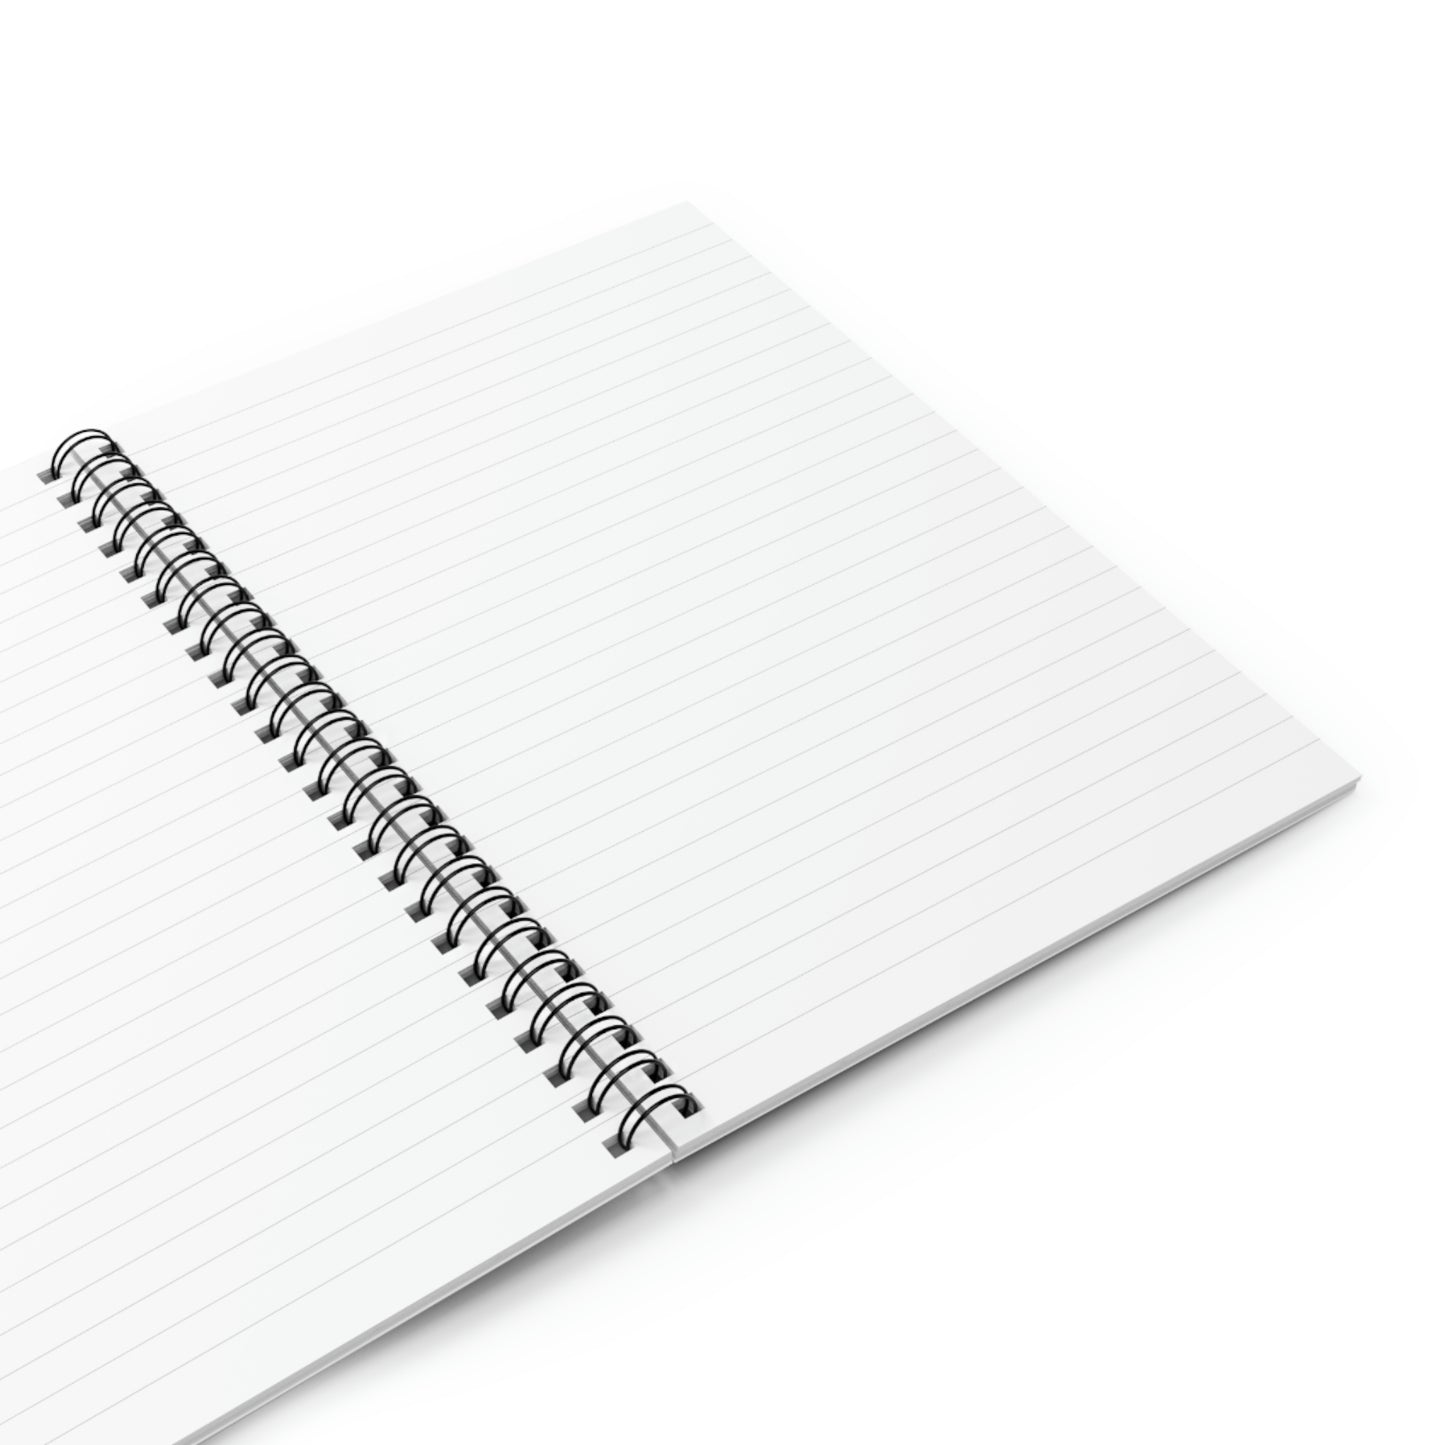 2023 Planner Spiral Notebook - Ruled Line